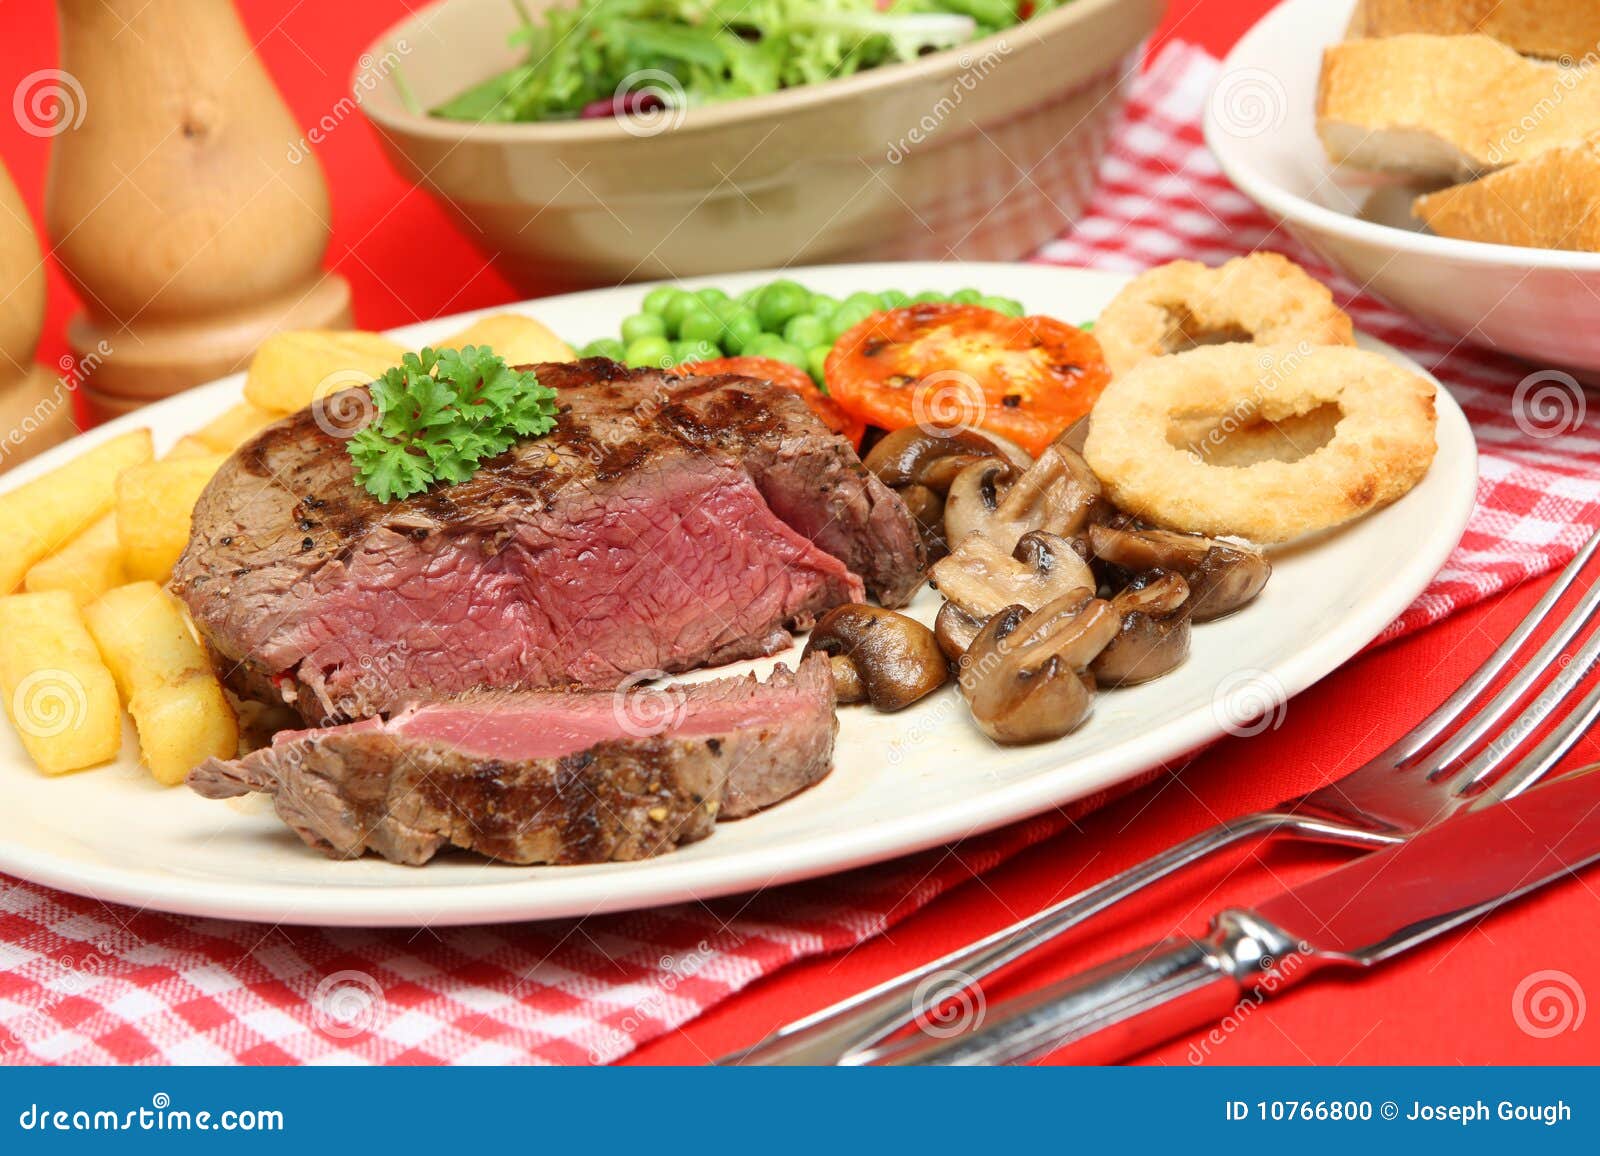 Rare Fillet Steak Dinner stock photo. Image of meal, horizontal - 10766800